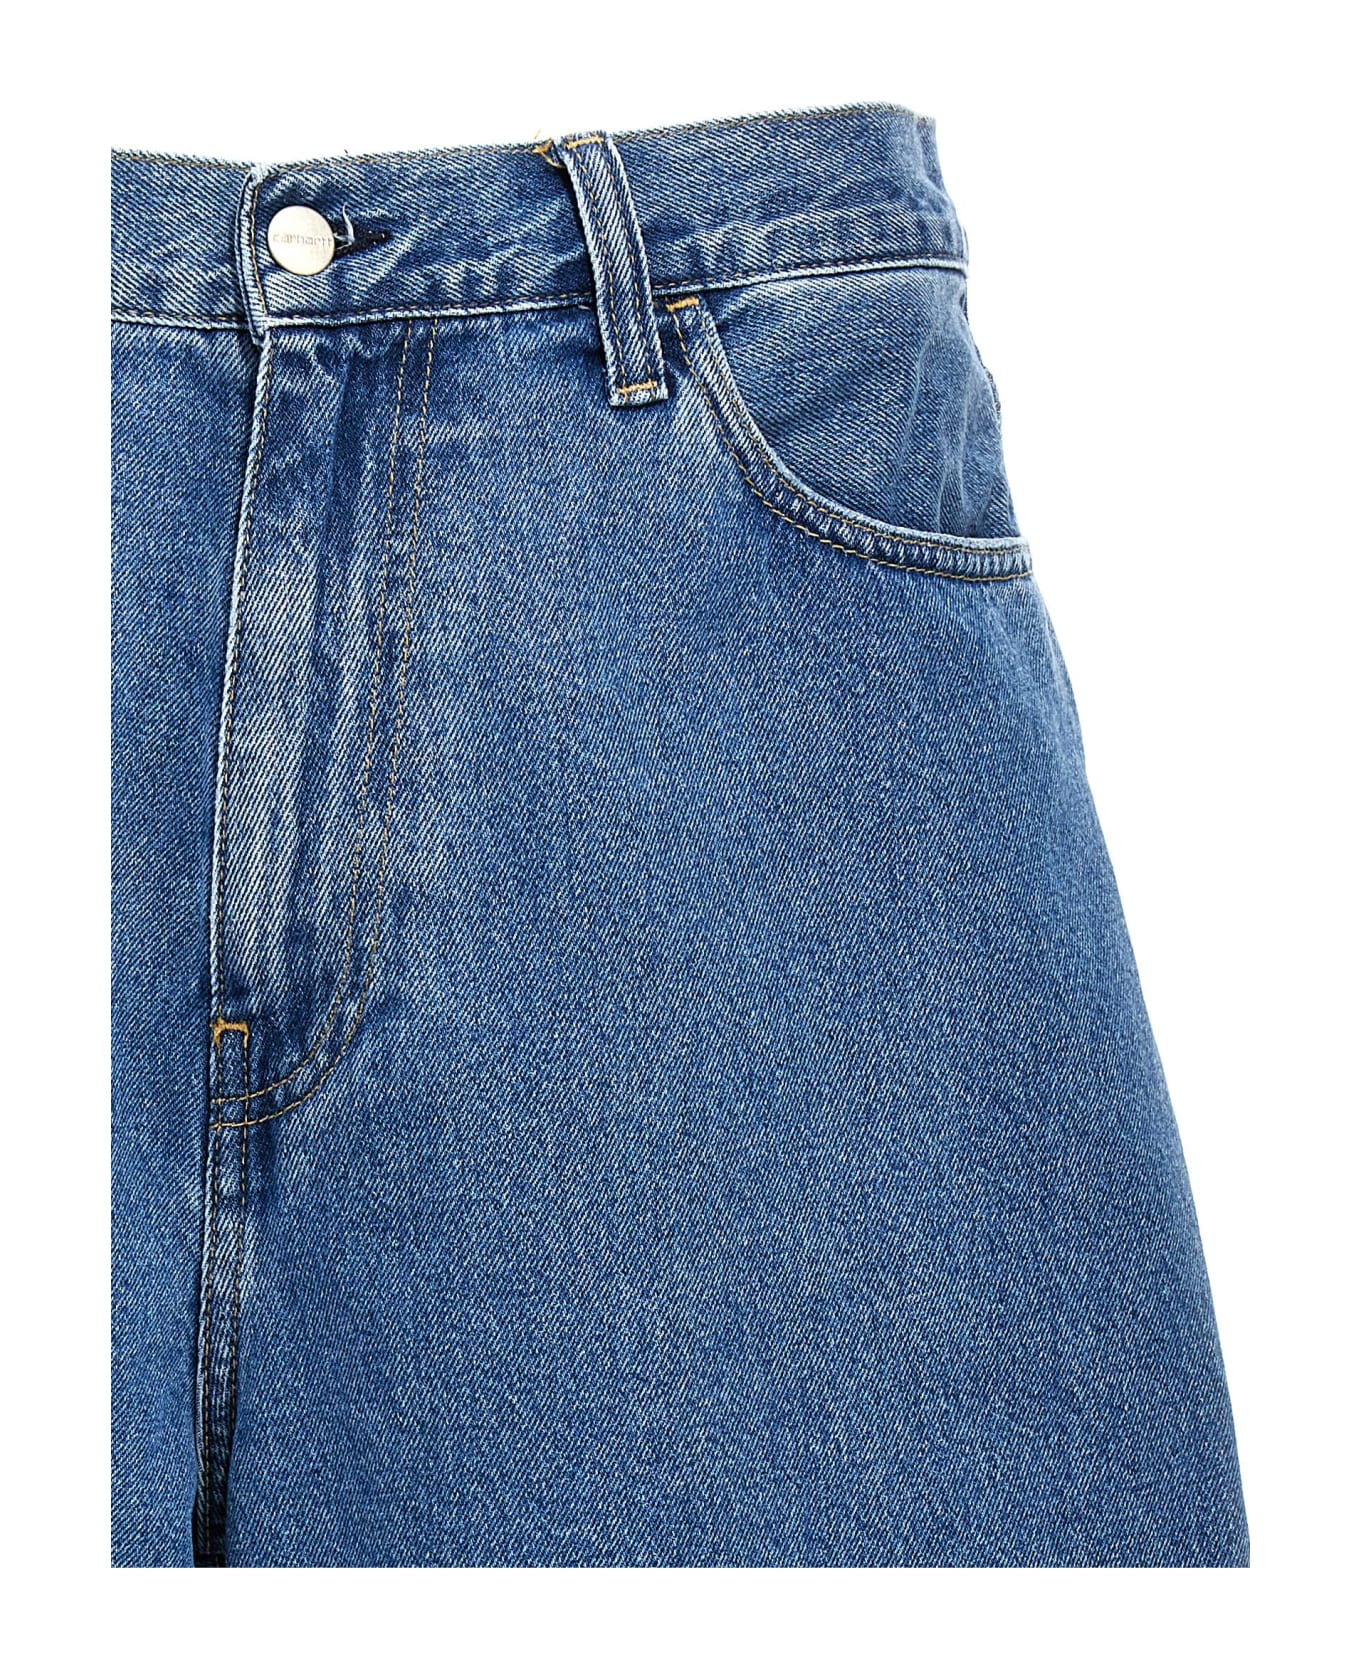 Carhartt 'landon' Bermuda Shorts - Blue